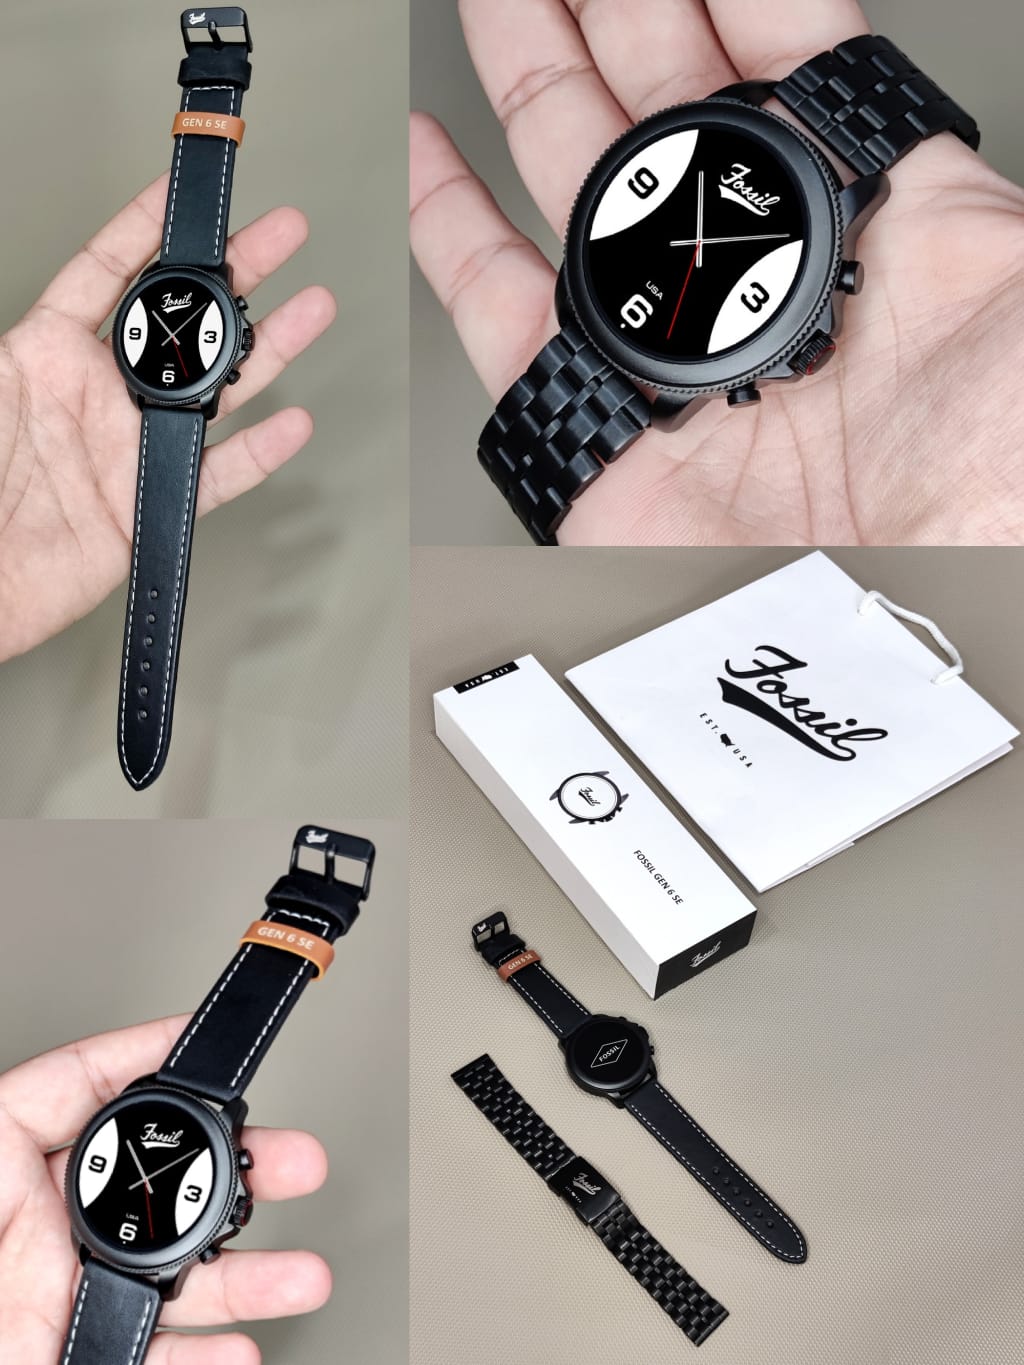 Gen 6 SE Smartwatch 44mm 2022 Branded